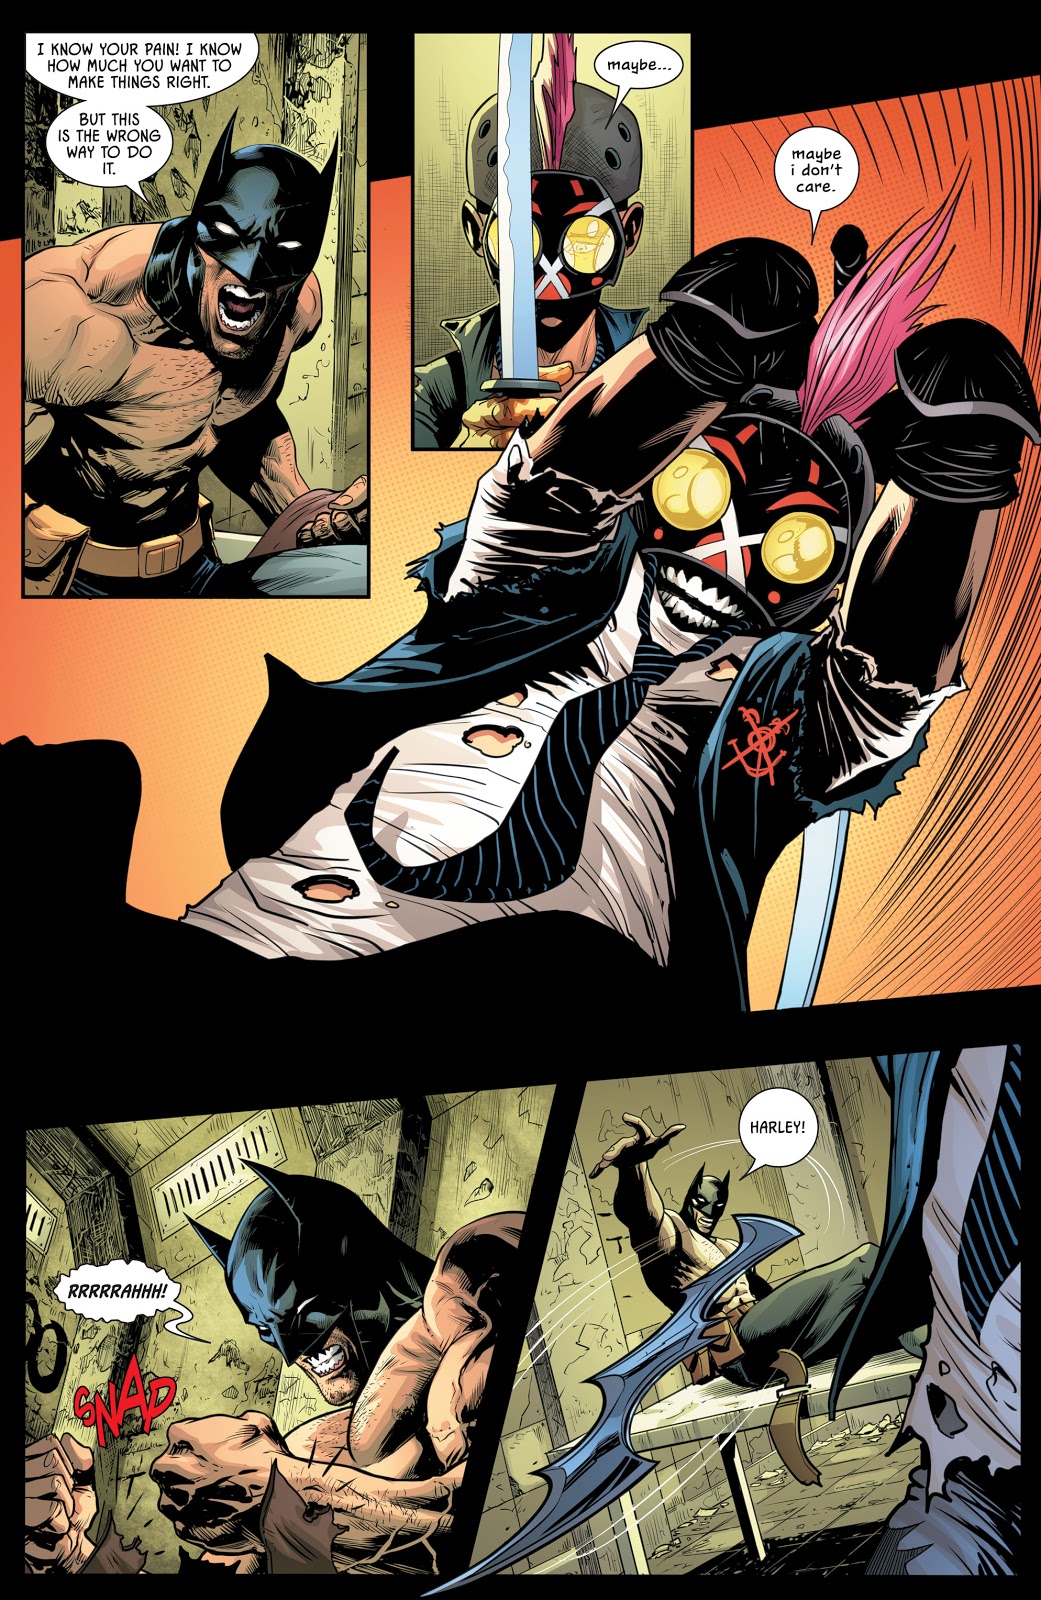 Clownhunter Tries To Kill Harley Quinn